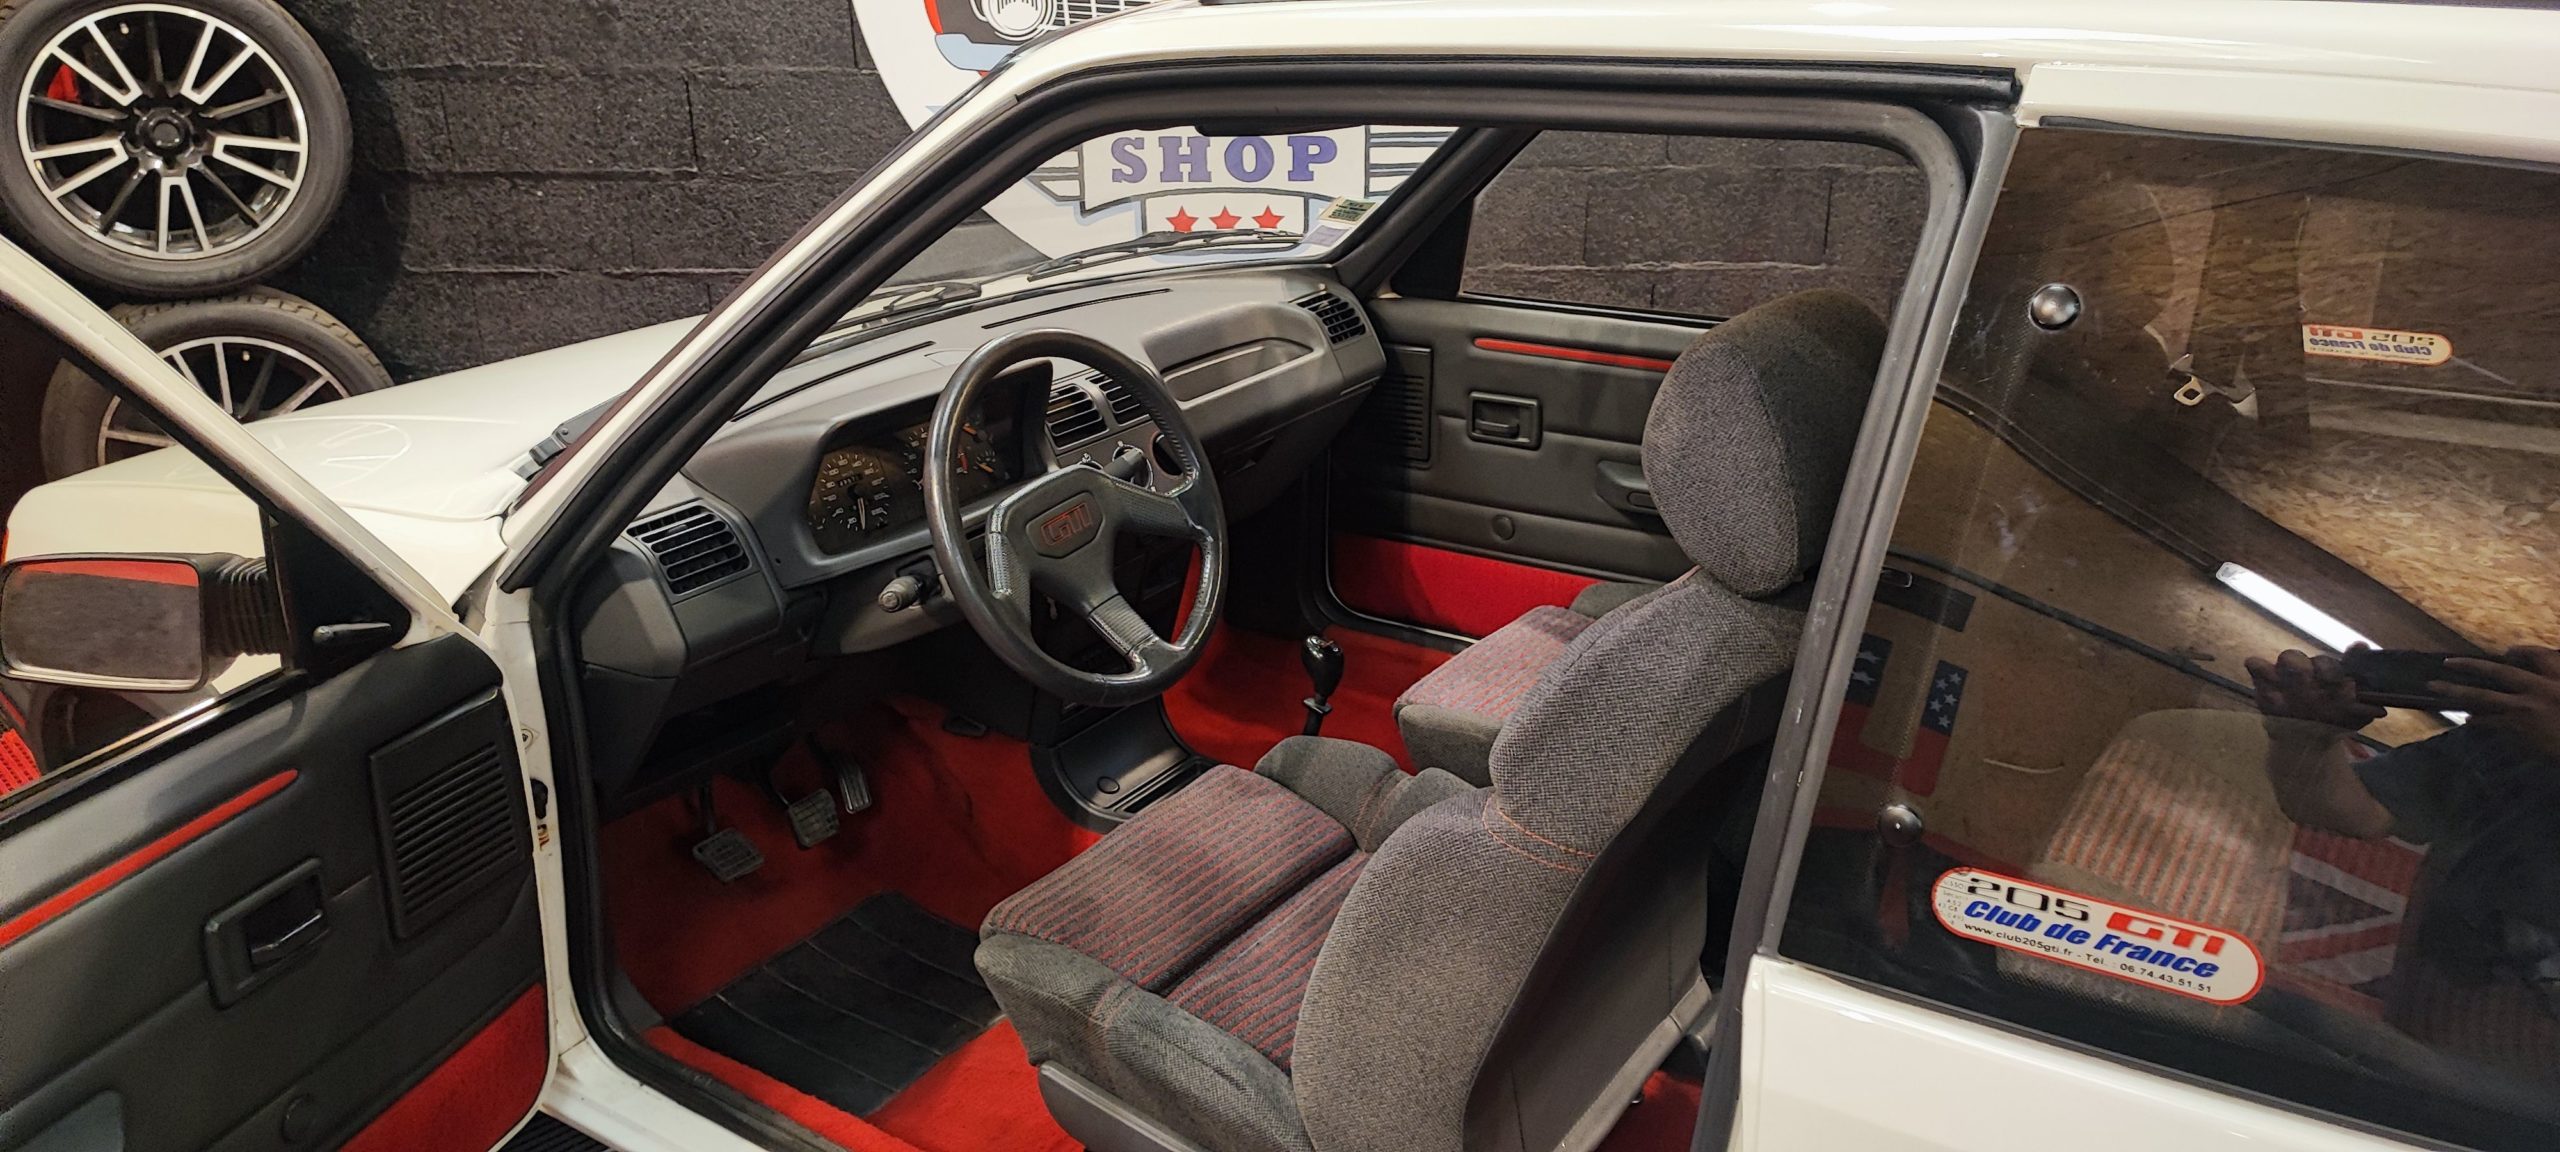 Peugeot 205 GTI 1.6 – 1988